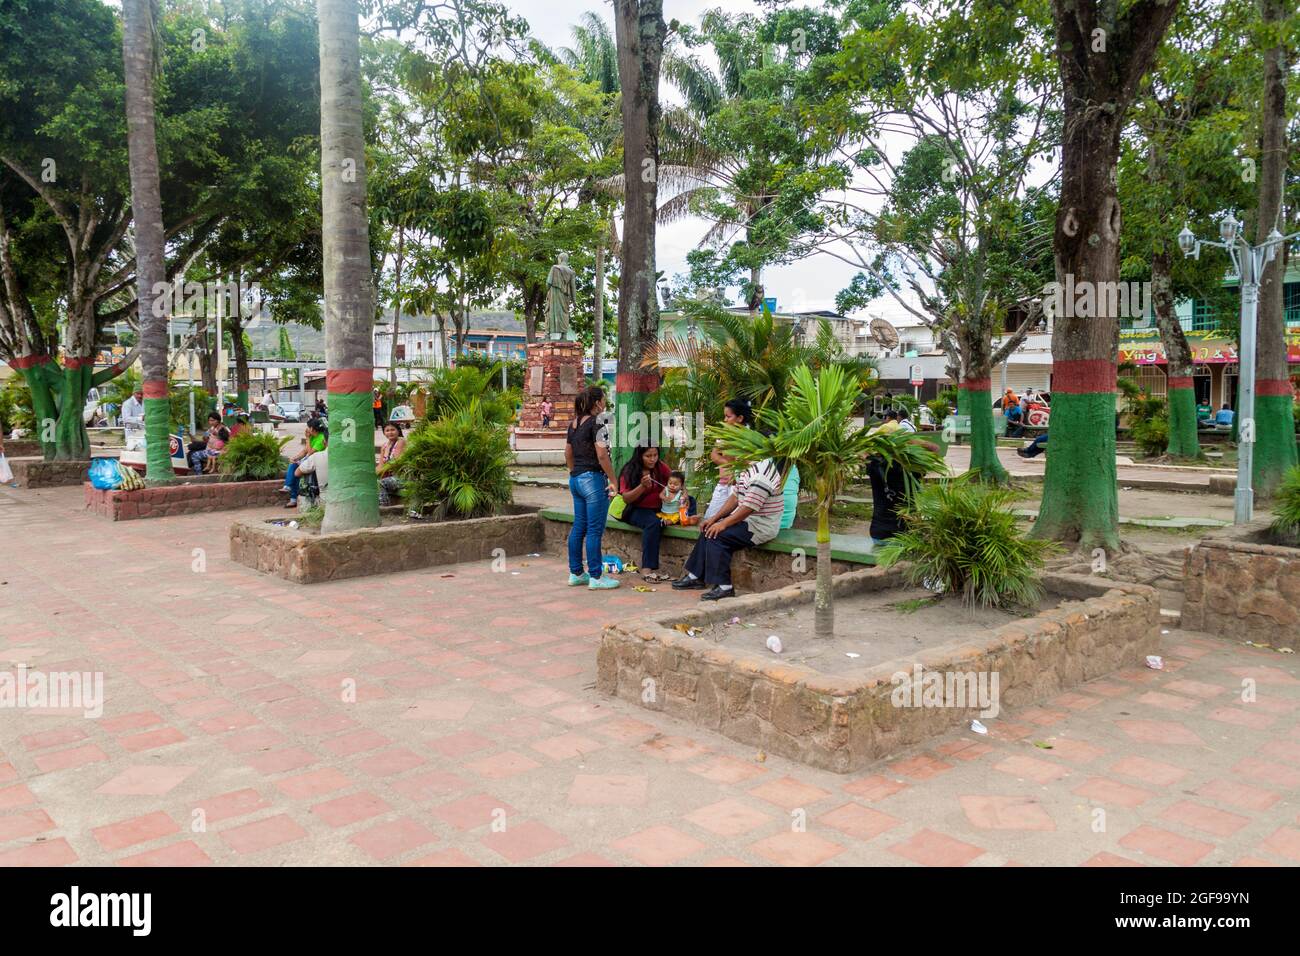 SANTA ELENA DE UAIREN, VENEZUELA - AUGUST 12, 2015: Plaza Bolivar square in Santa Elena town. Santa Elena is home to many travel agencies offering tou Stock Photo